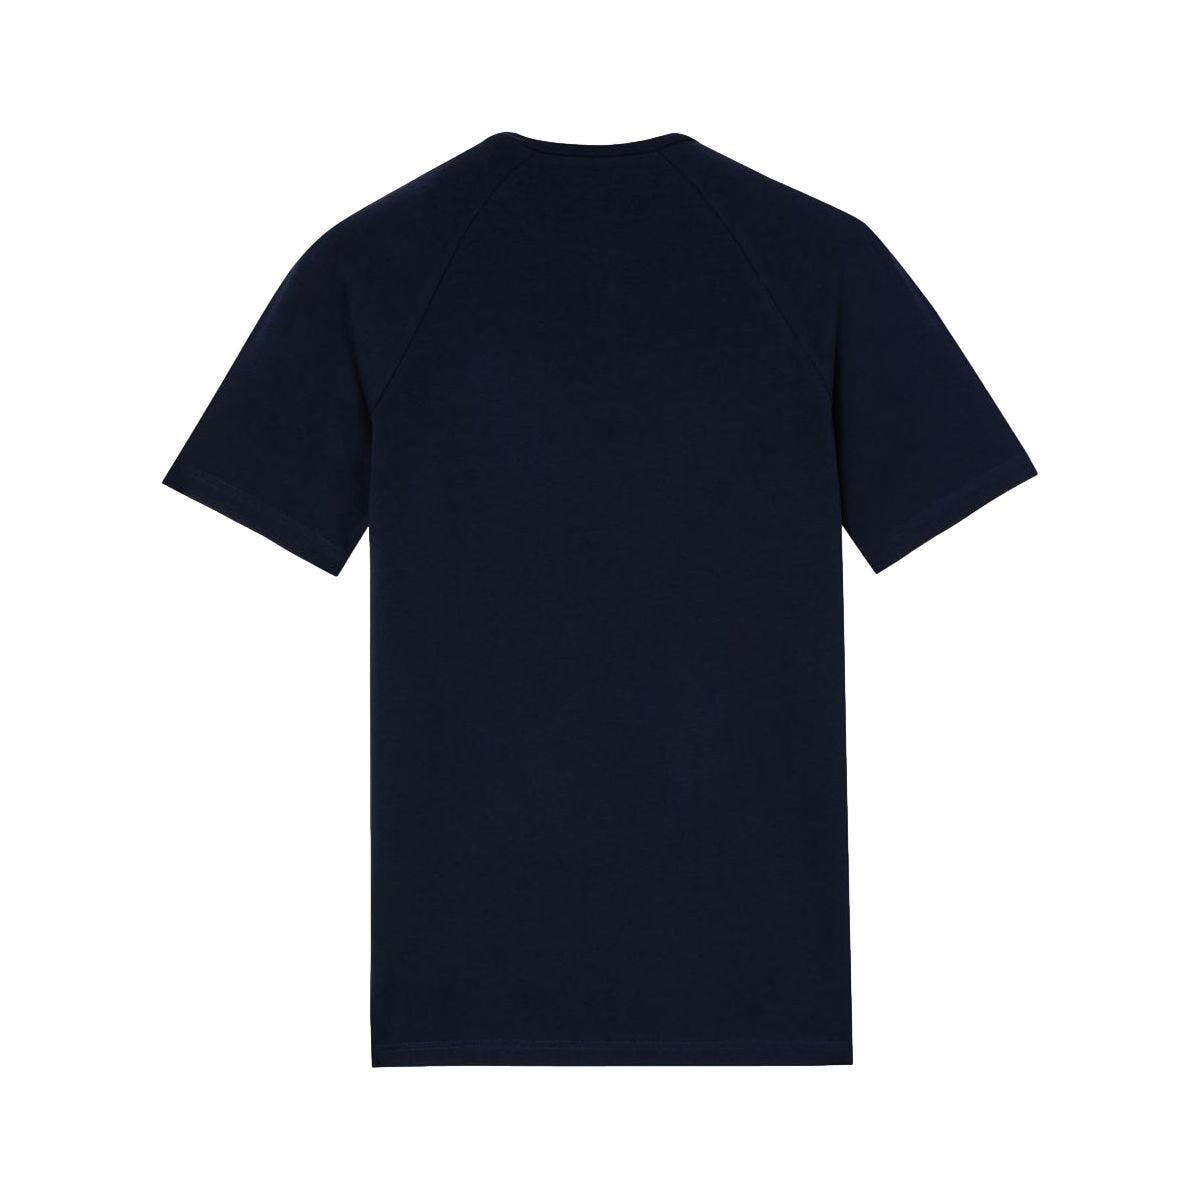 Tee-shirt Temp-IQ Bleu marine - Dickies - Taille M 1